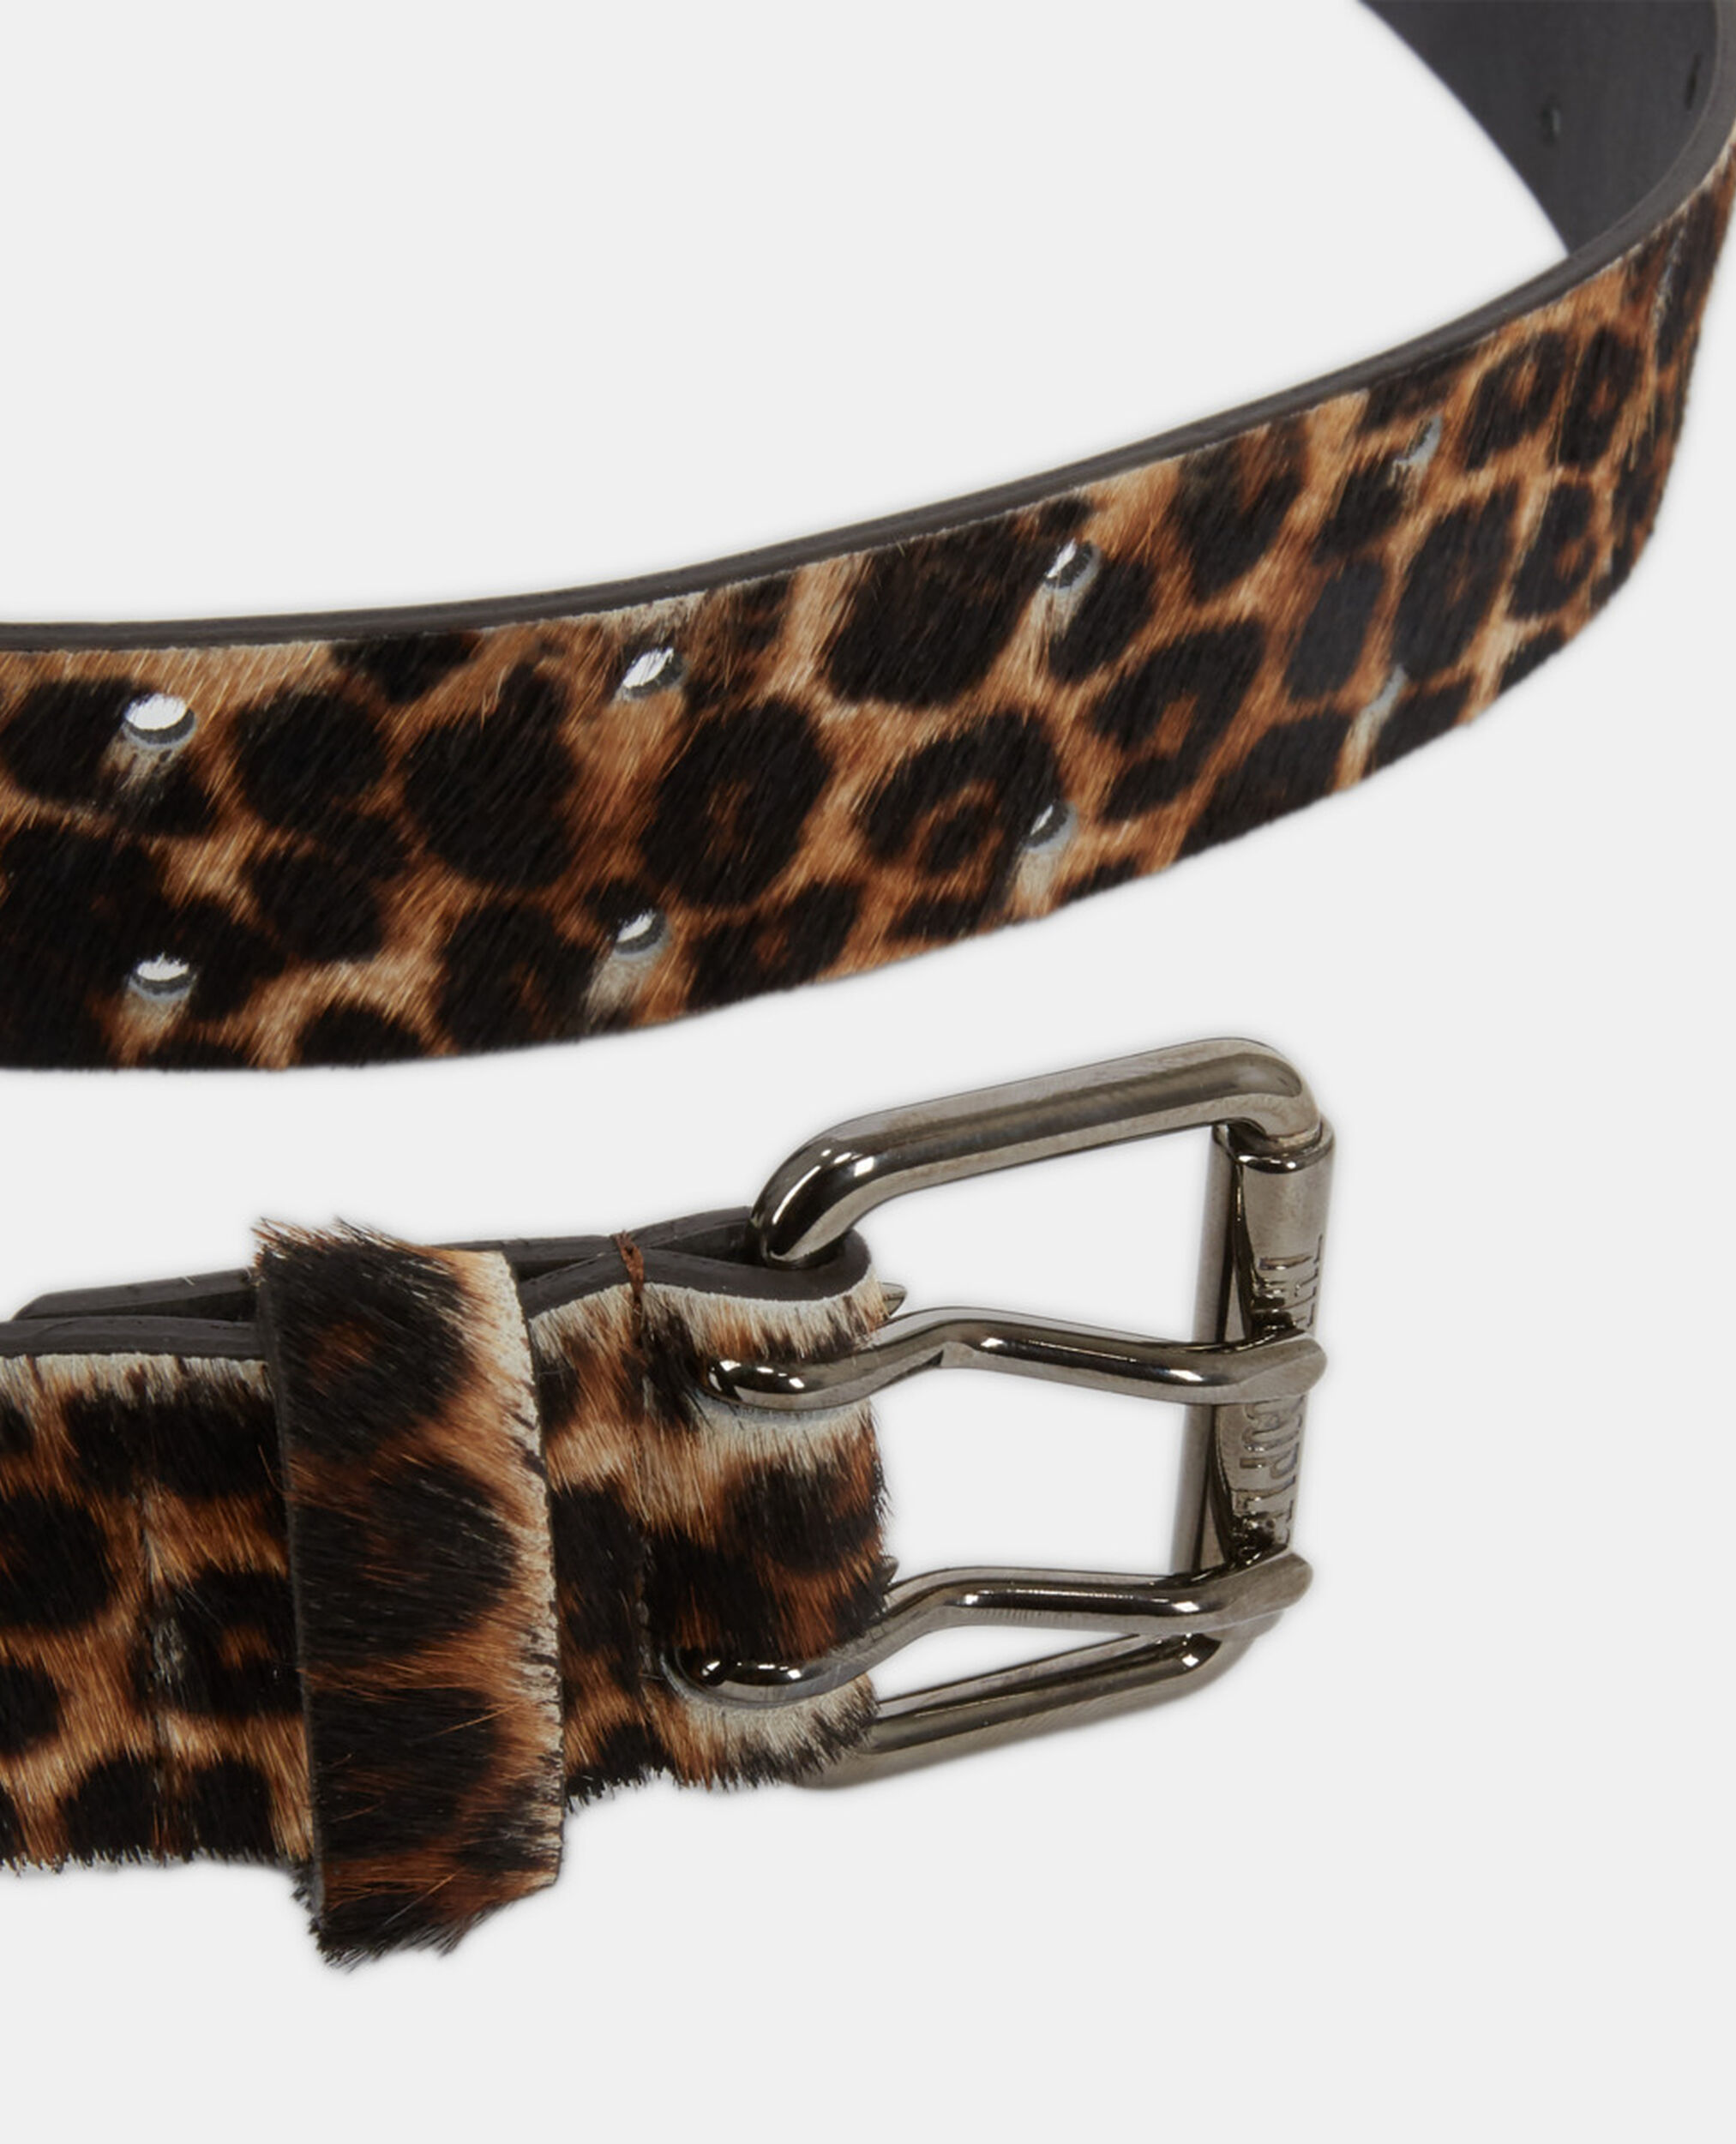 Cinturón piel leopardo, LEOPARD, hi-res image number null